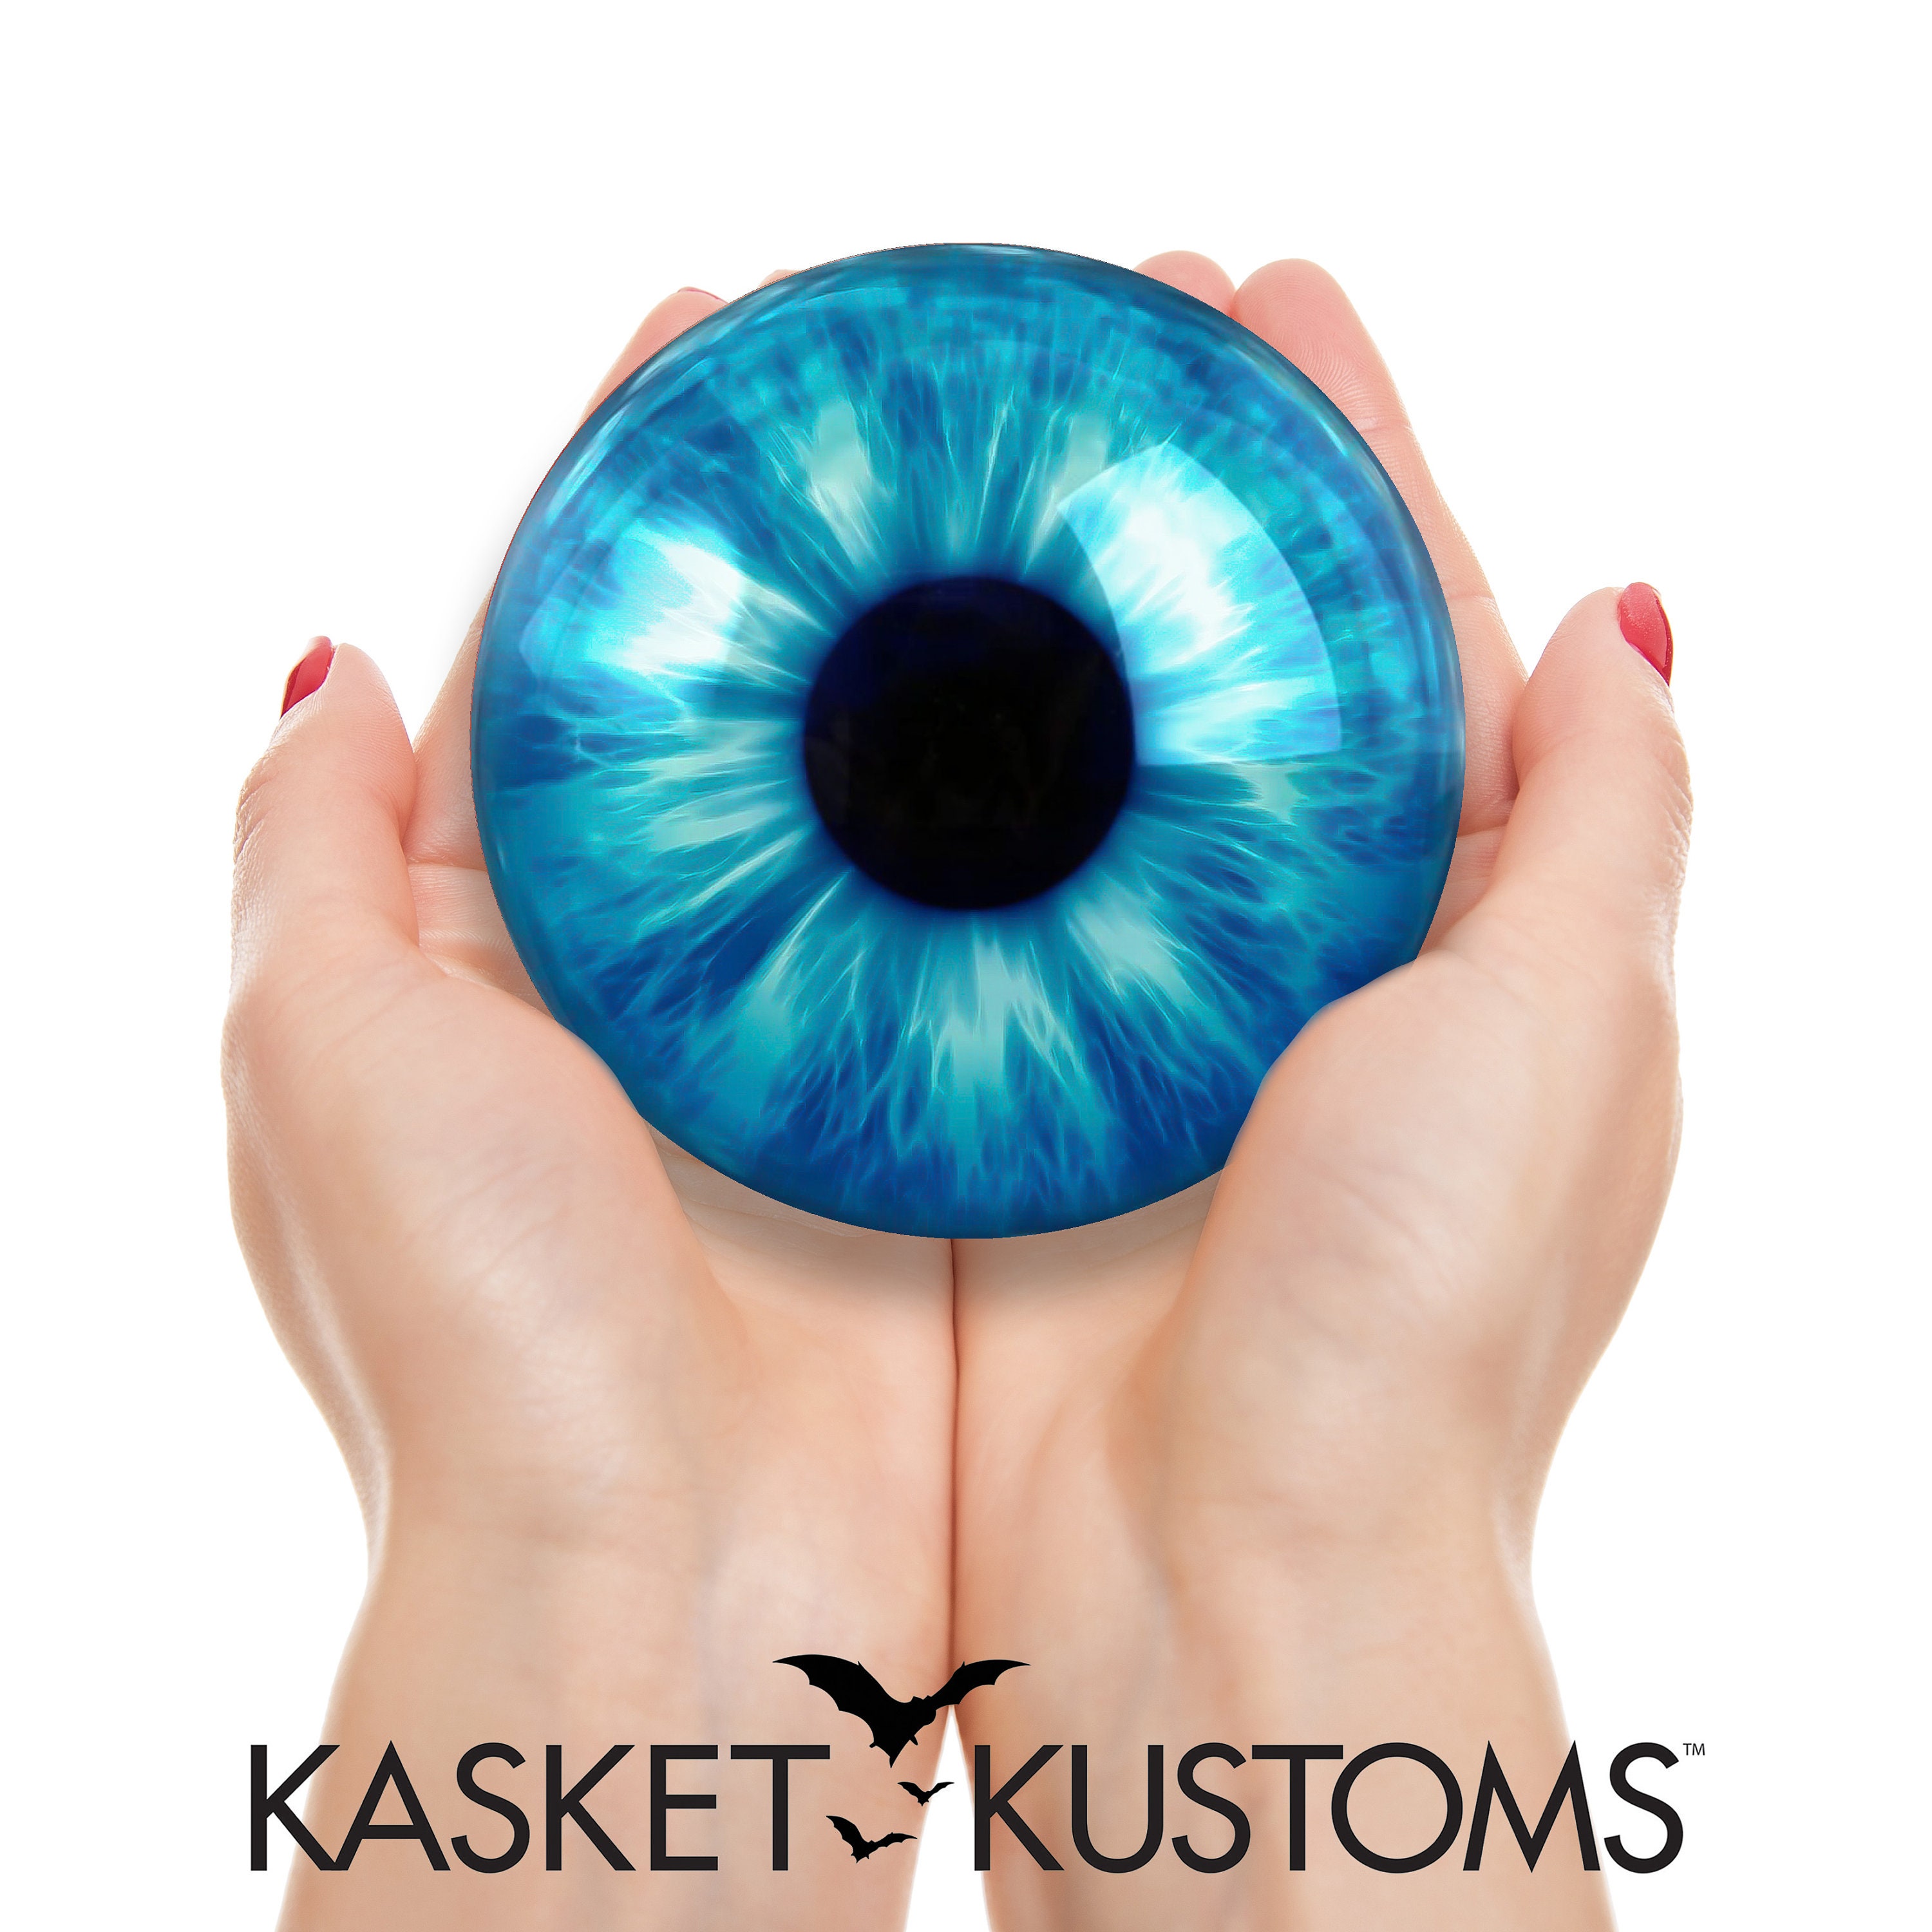 1 Decorative Eyeballs Sold in Pairs 